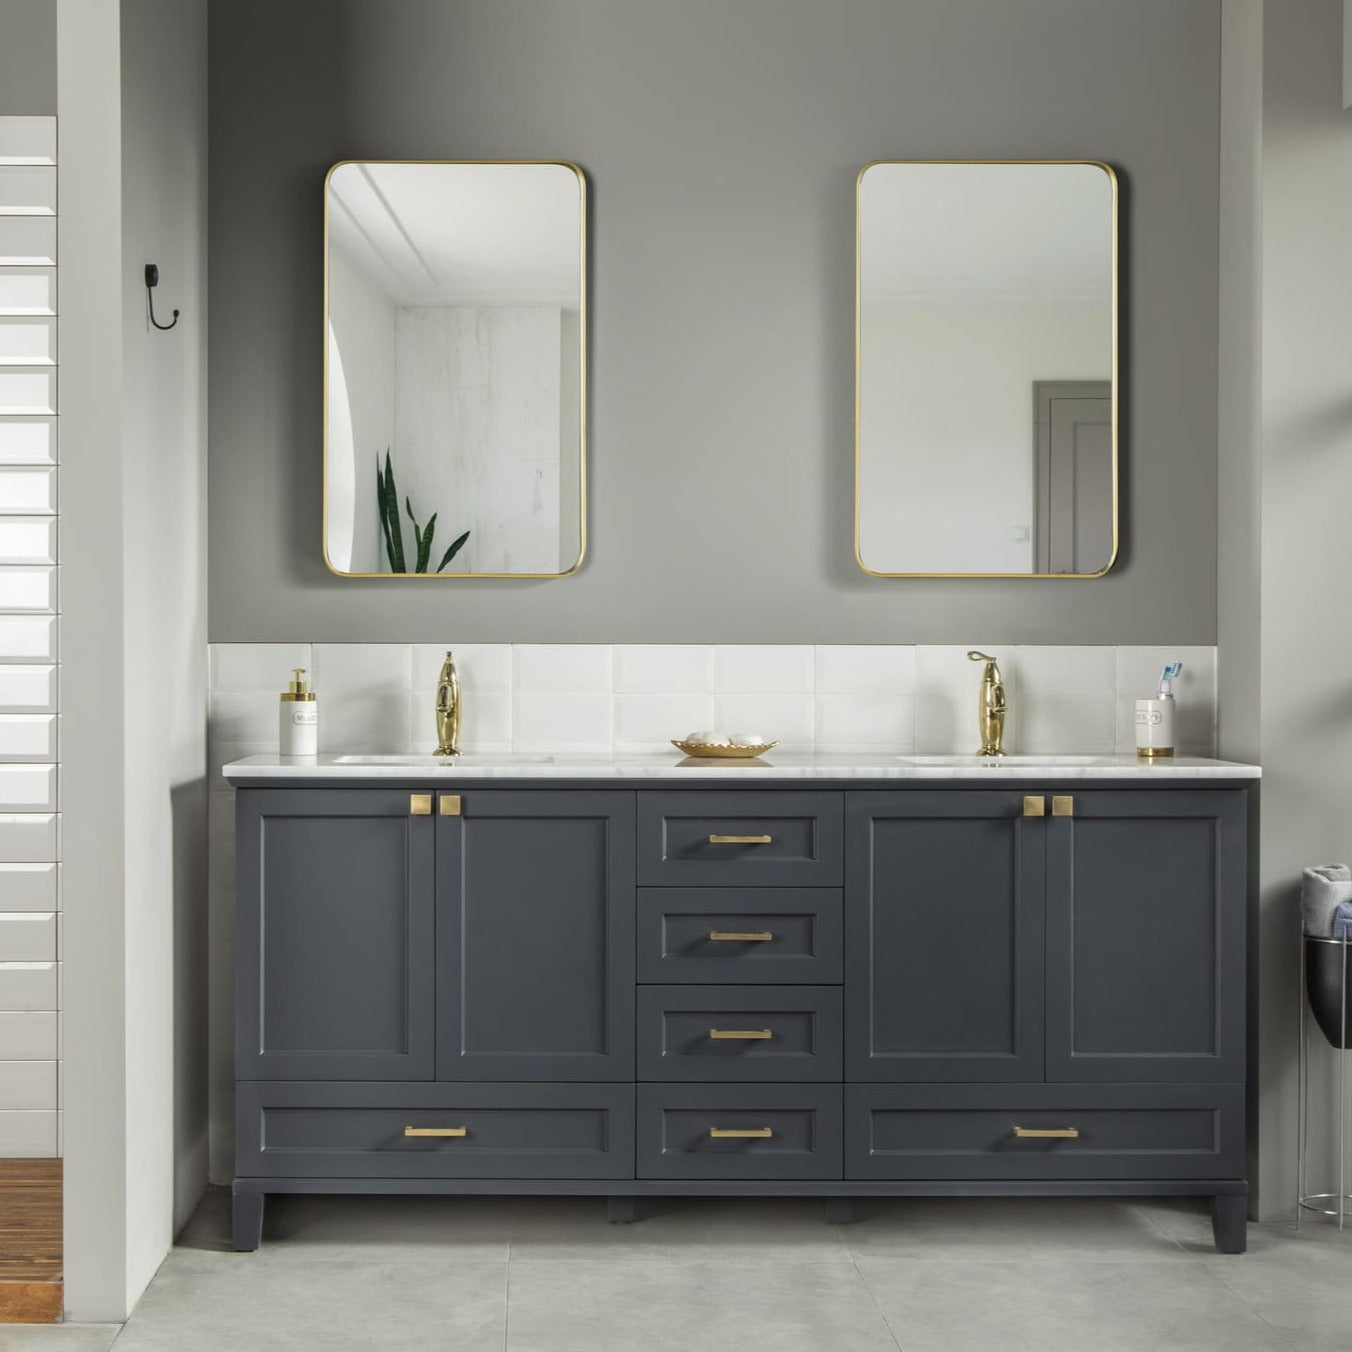 Paloma Bathroom Cabinets  Homelero 72"  #size_72"  #color_dark grey  #hardware_brass